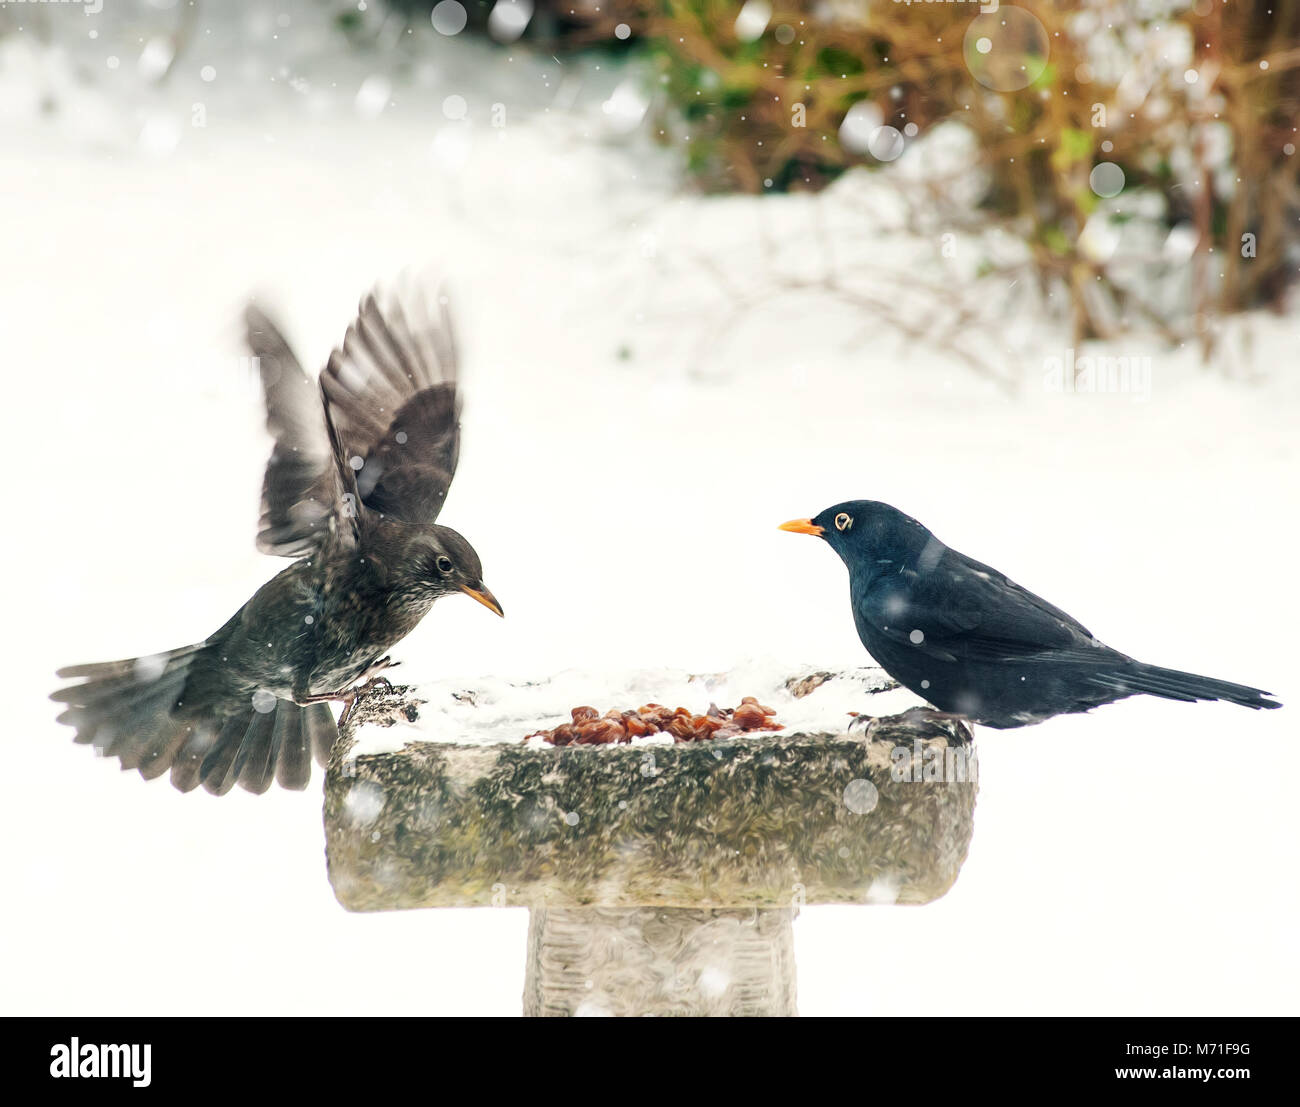 Vögel füttern im Winter Garten Stockfoto